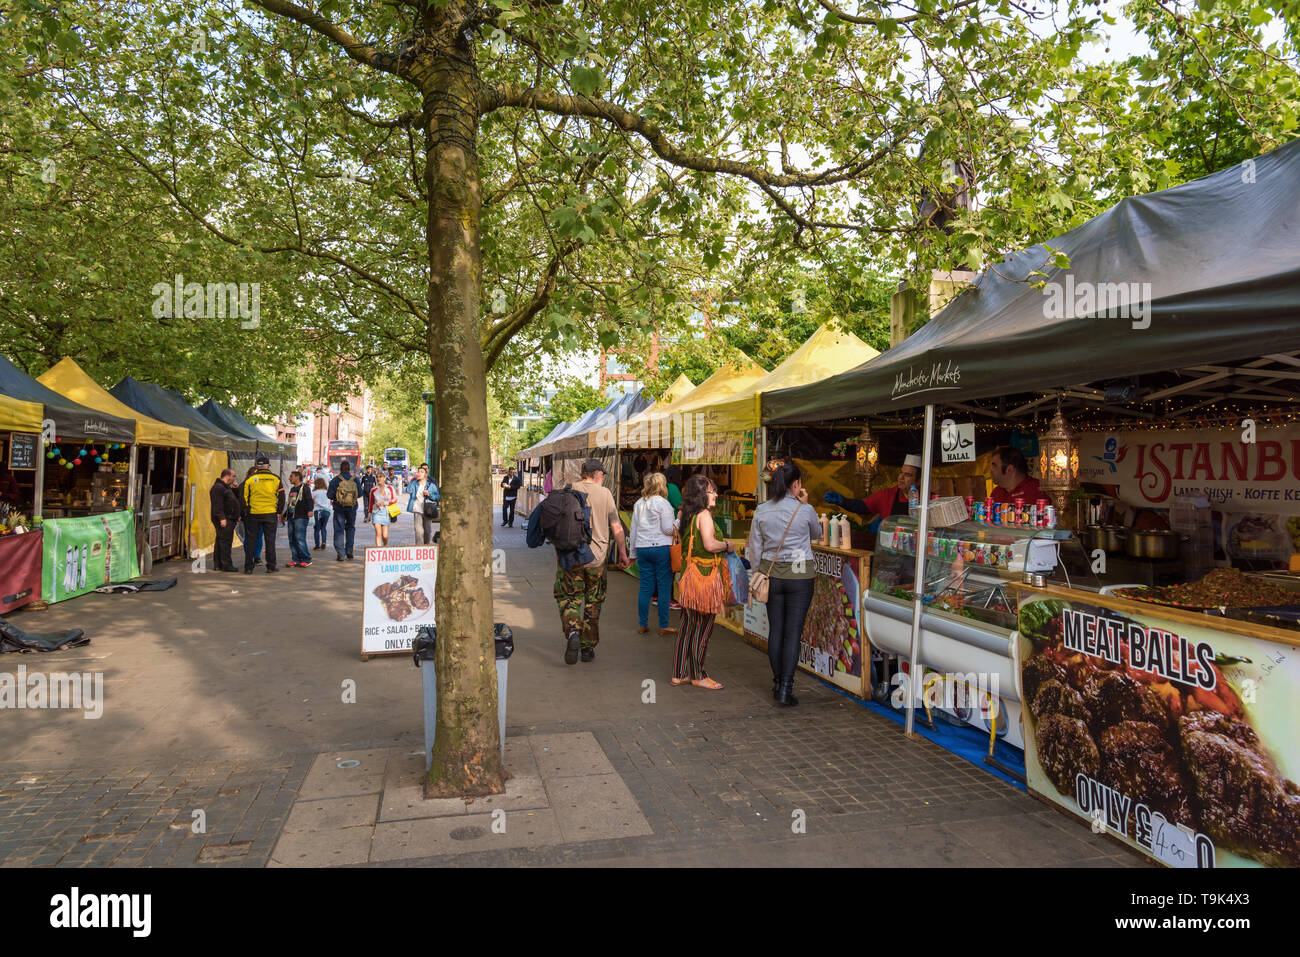 street-food-market-manchester-piccadilly-gardens-T9K4X3.jpg